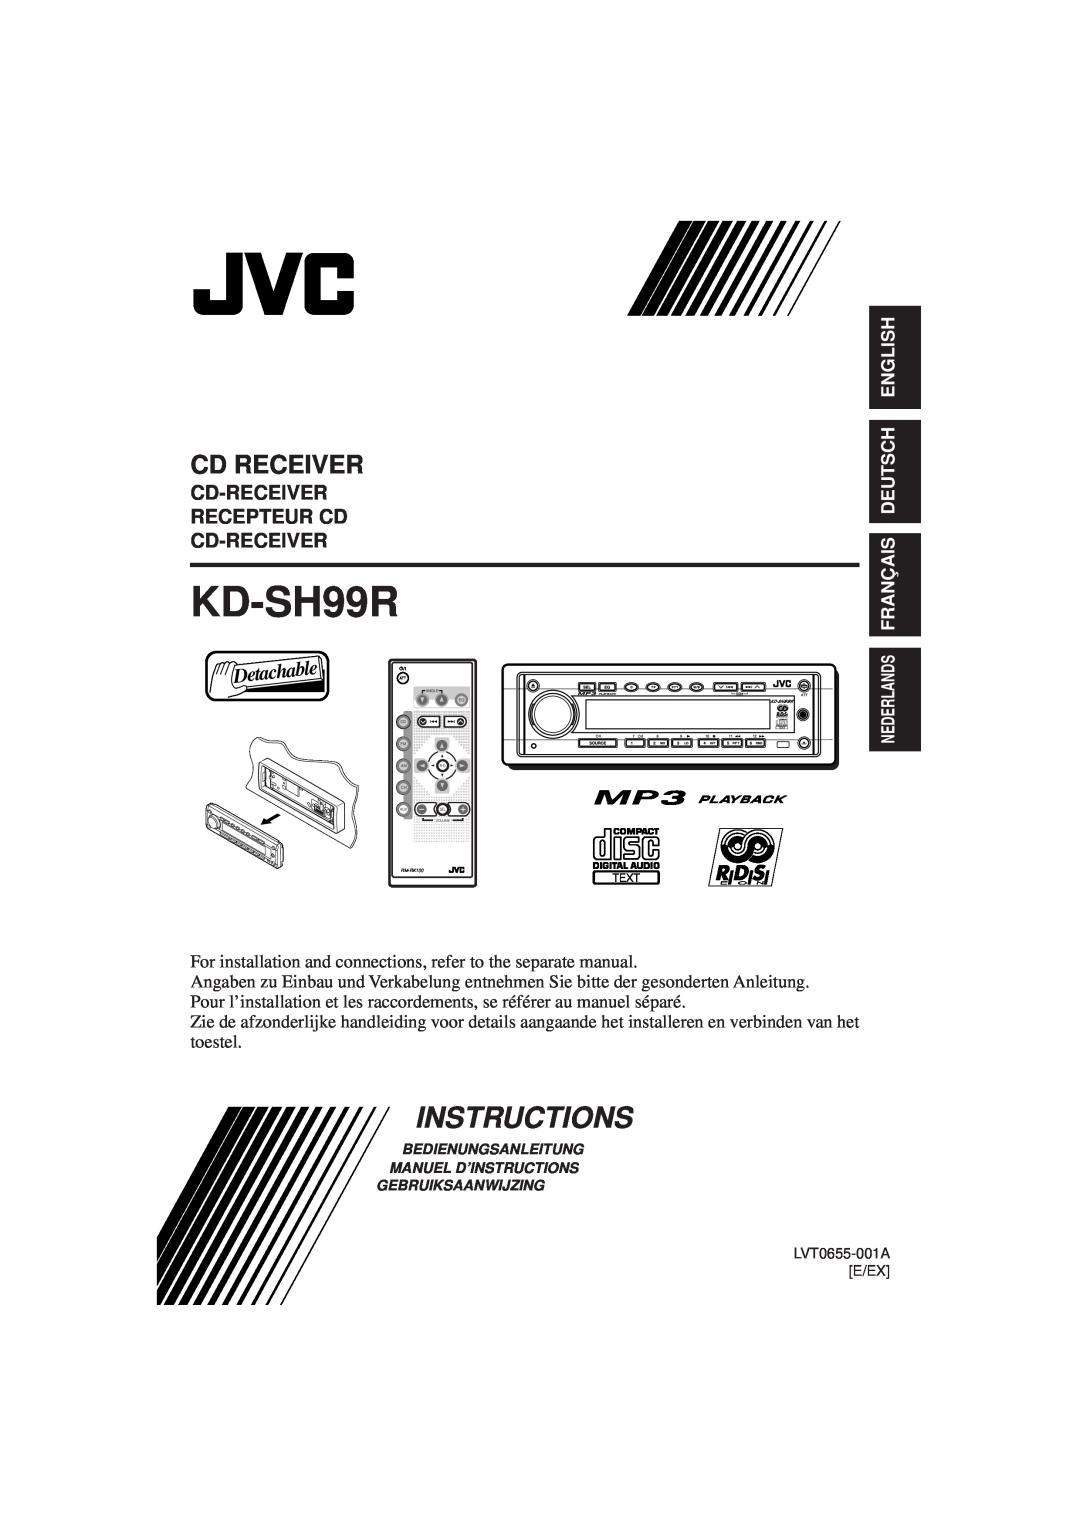 JVC KD-SH99R service manual Contents, Cd Receiver 